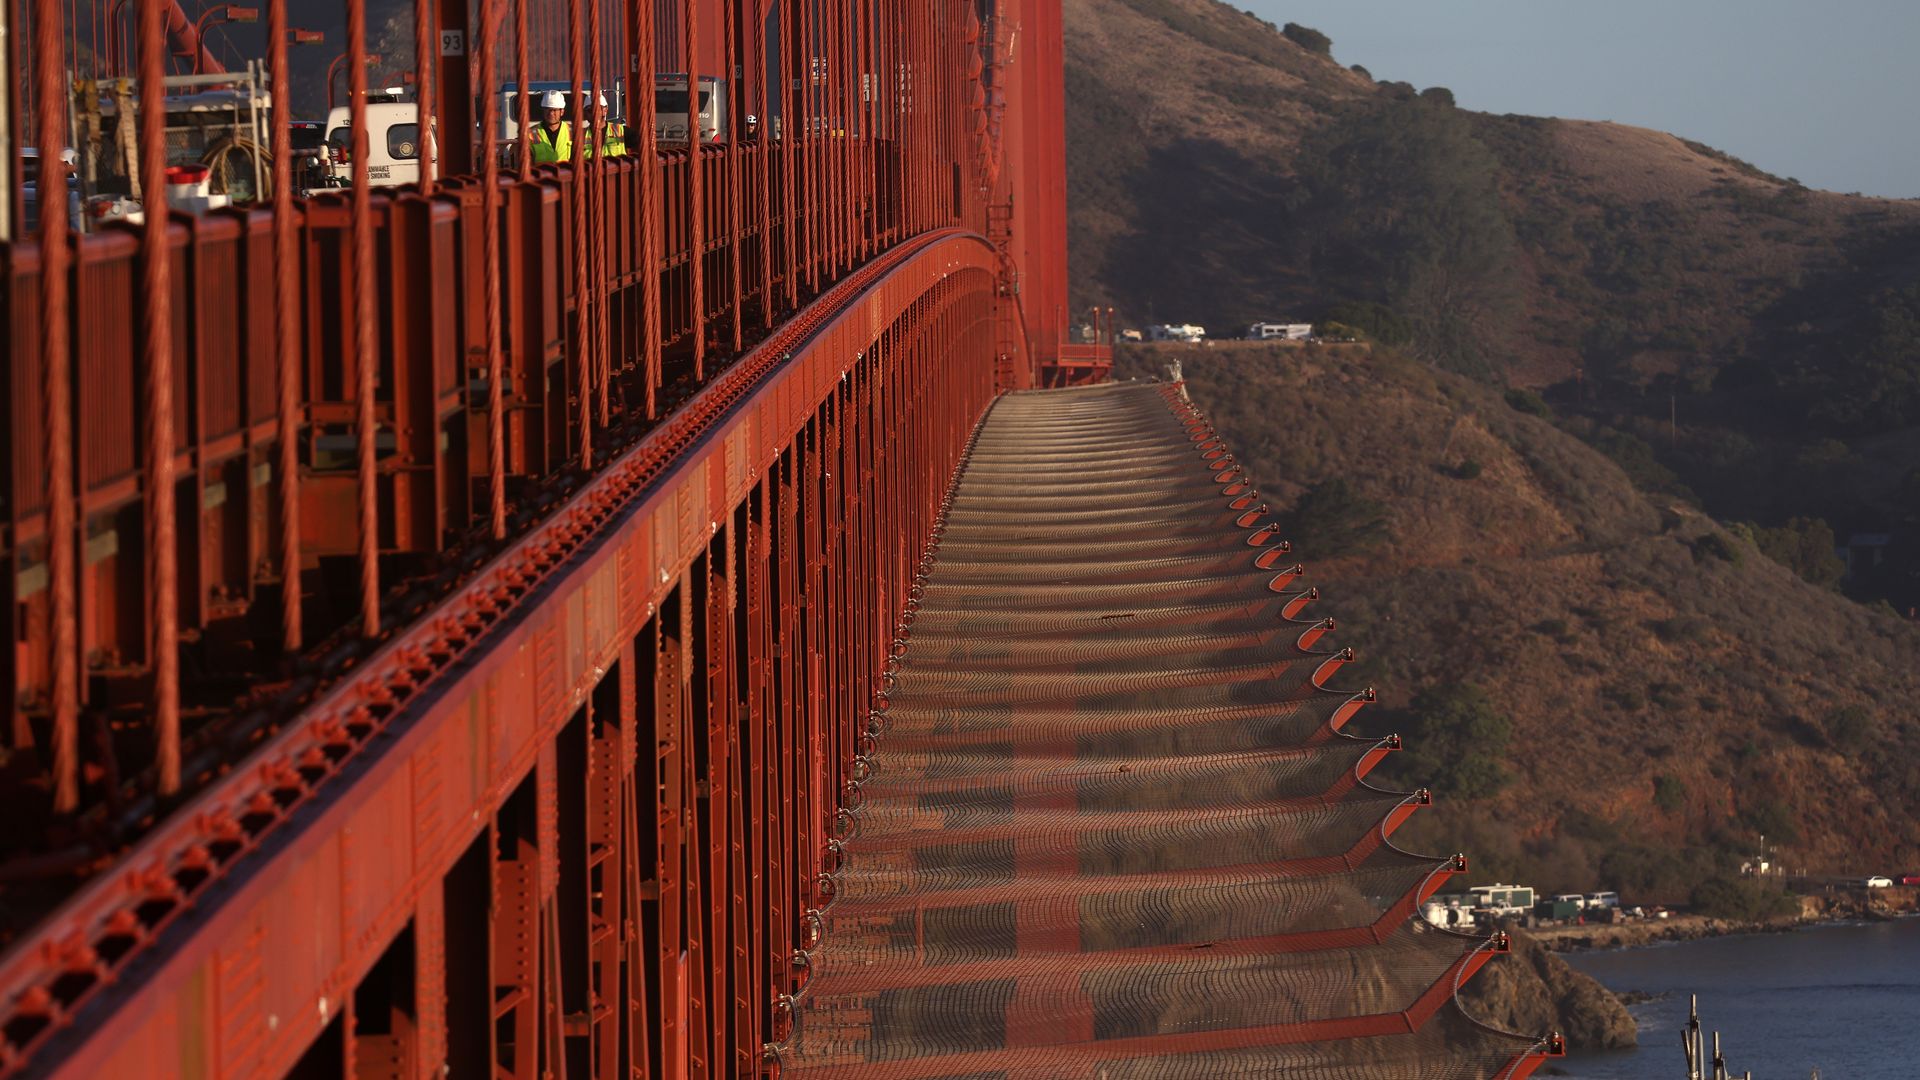 Golden Gate Bridge suicide prevention net is fully installed